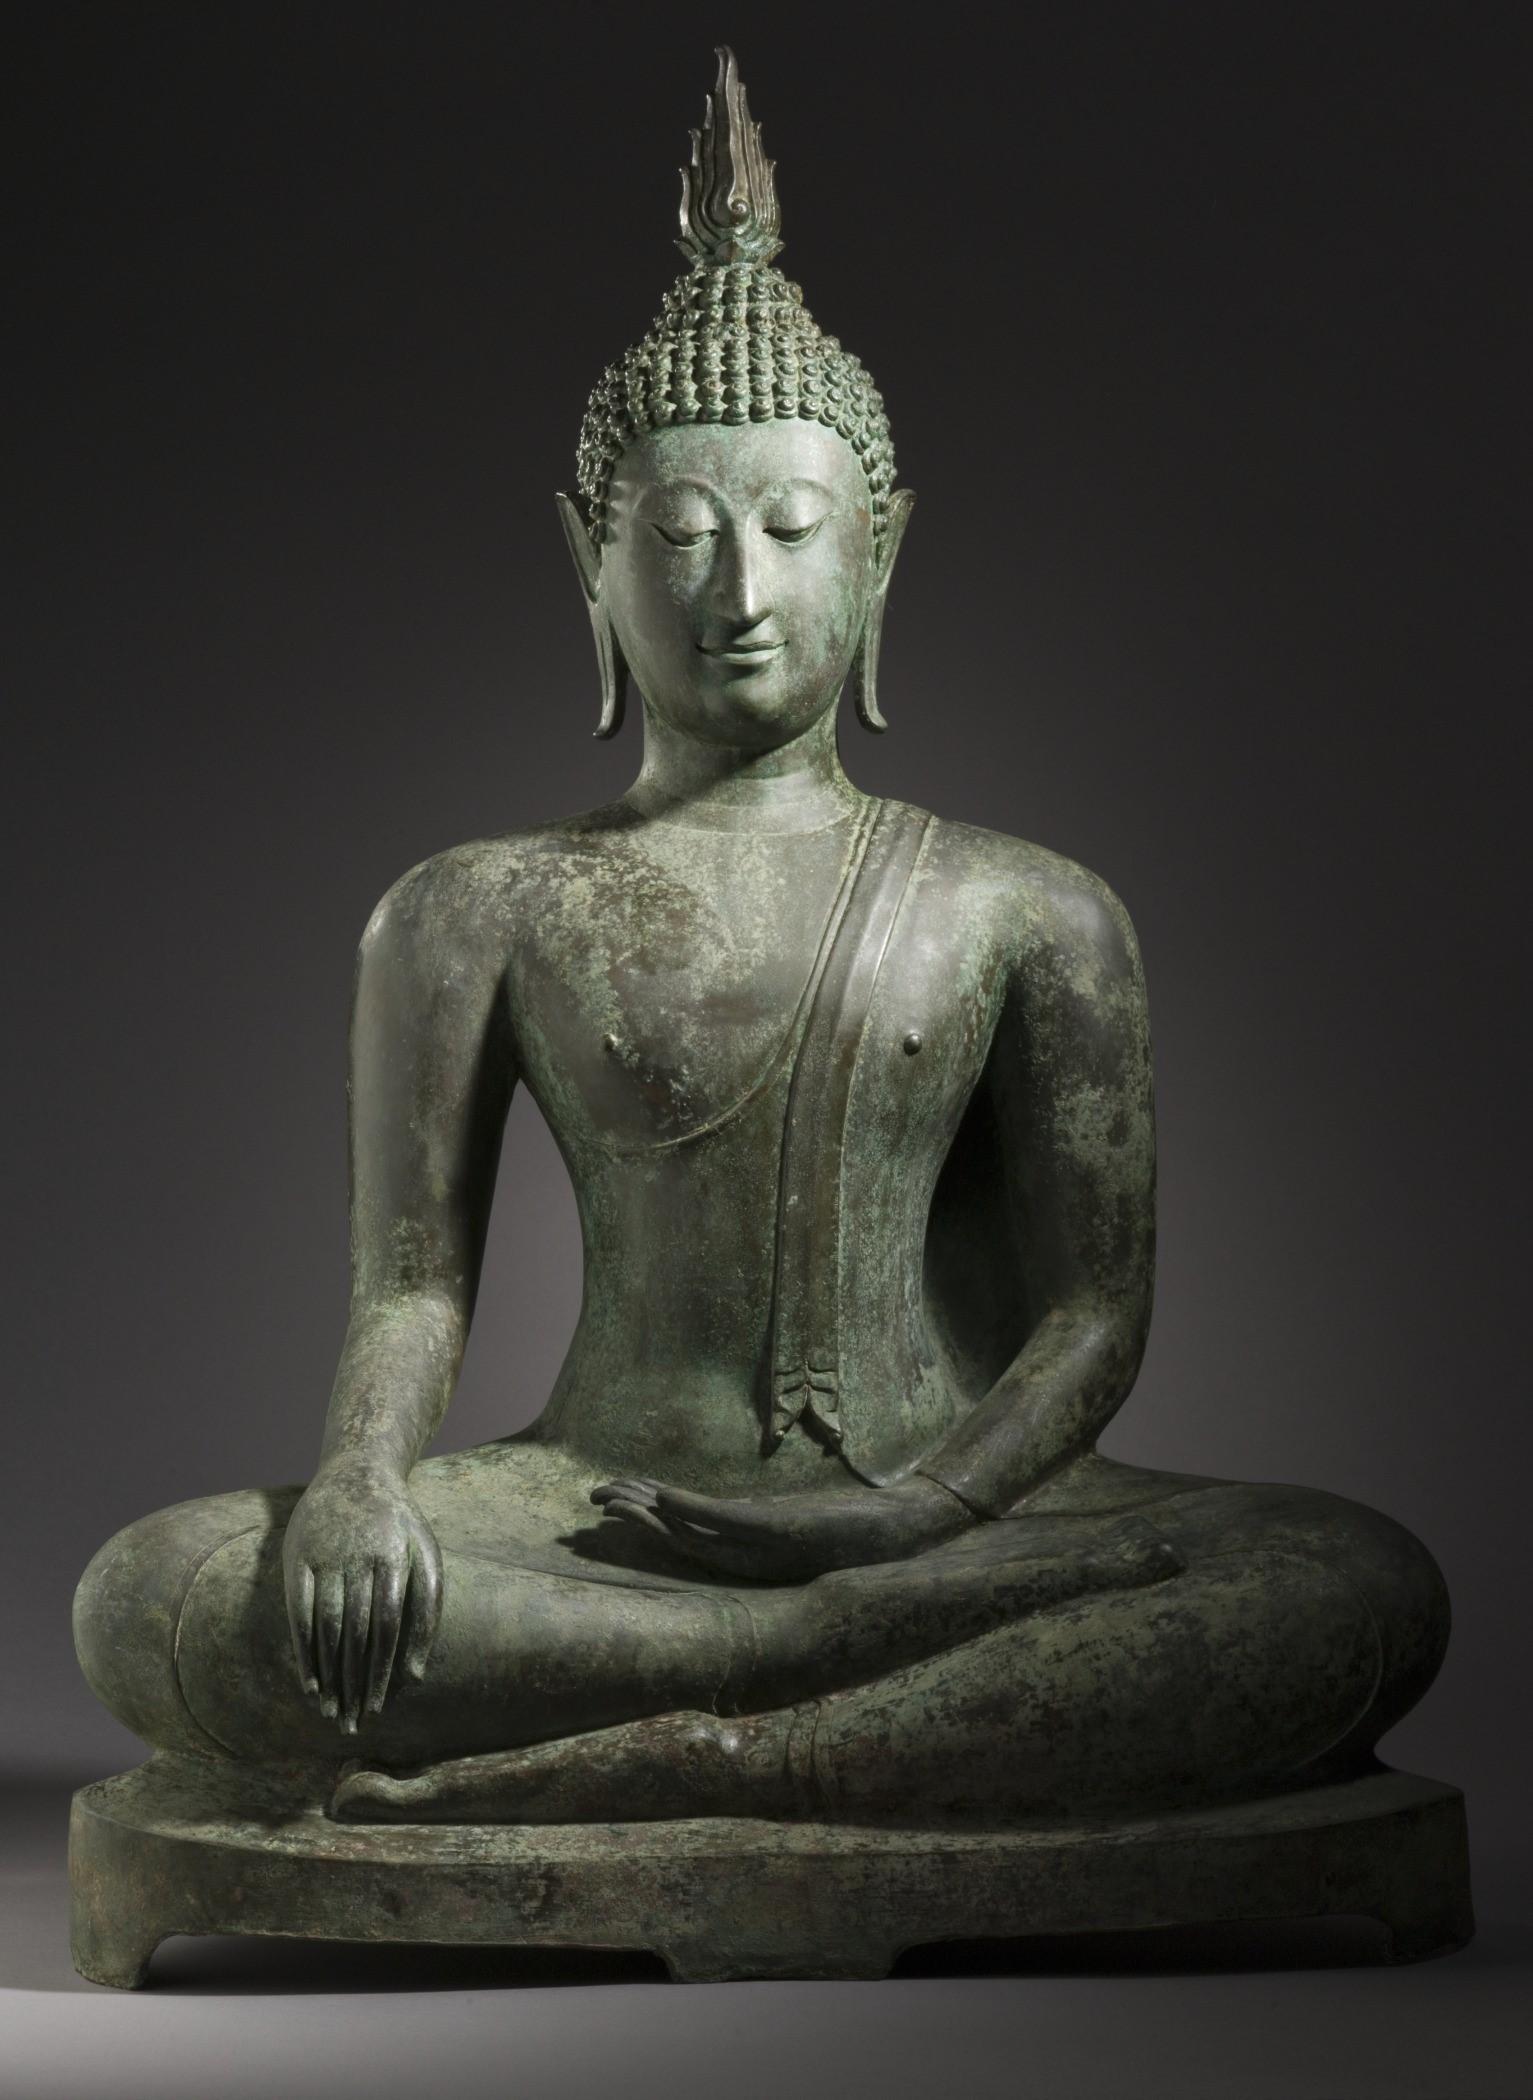 HD wallpaper, Thailand, Statue, Buddha, Meditation, Portrait Display, Buddhism